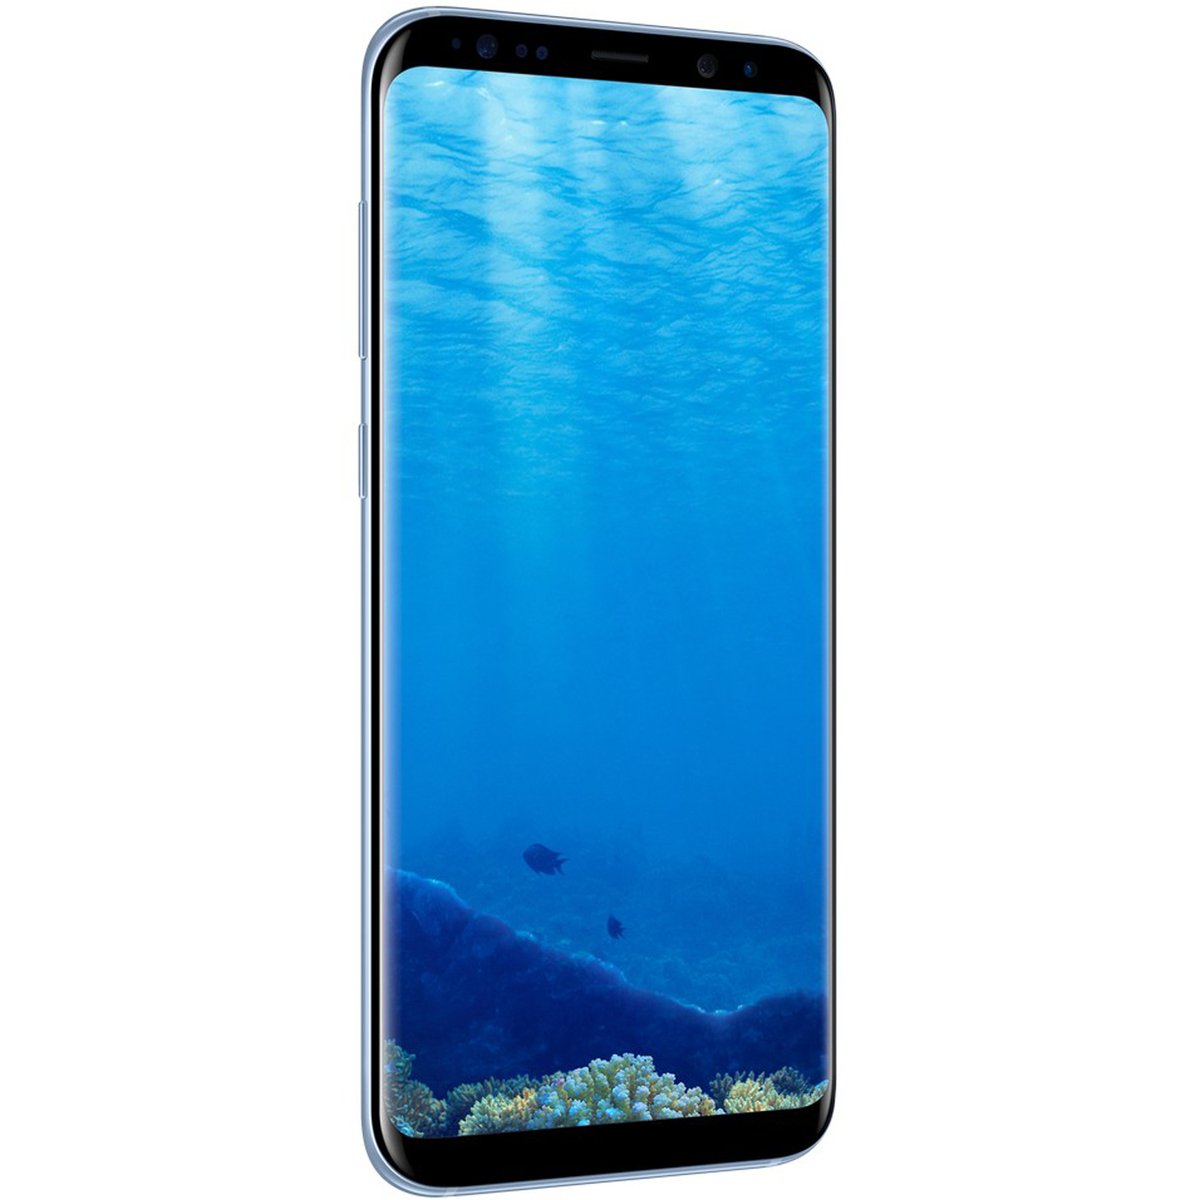 Samsung Galaxy S8+ SMG955 Coral Blue